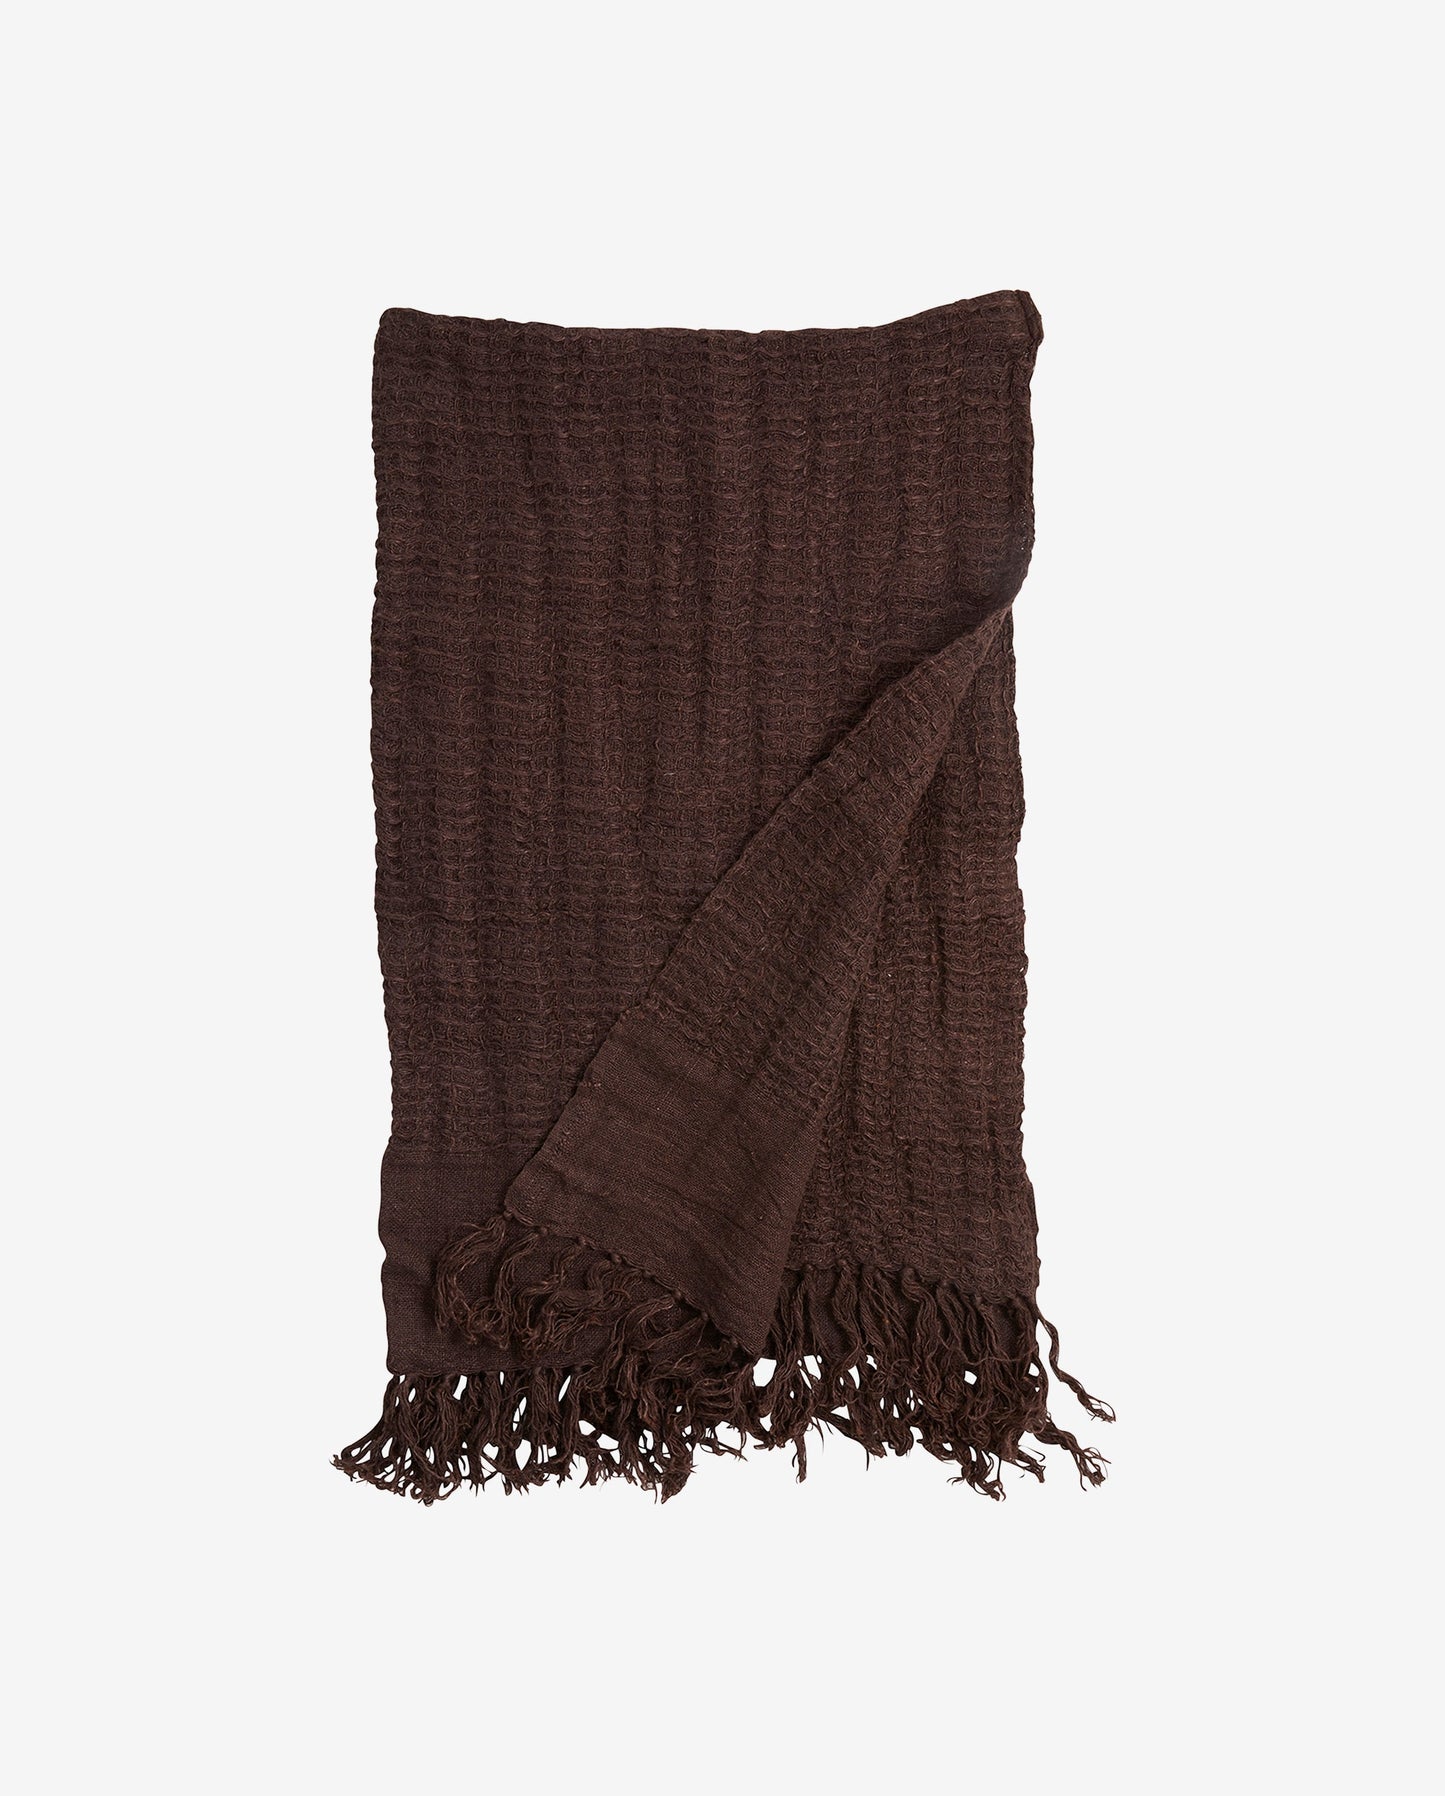 Nordal ARIES towel w/fringes, M, linen, brown